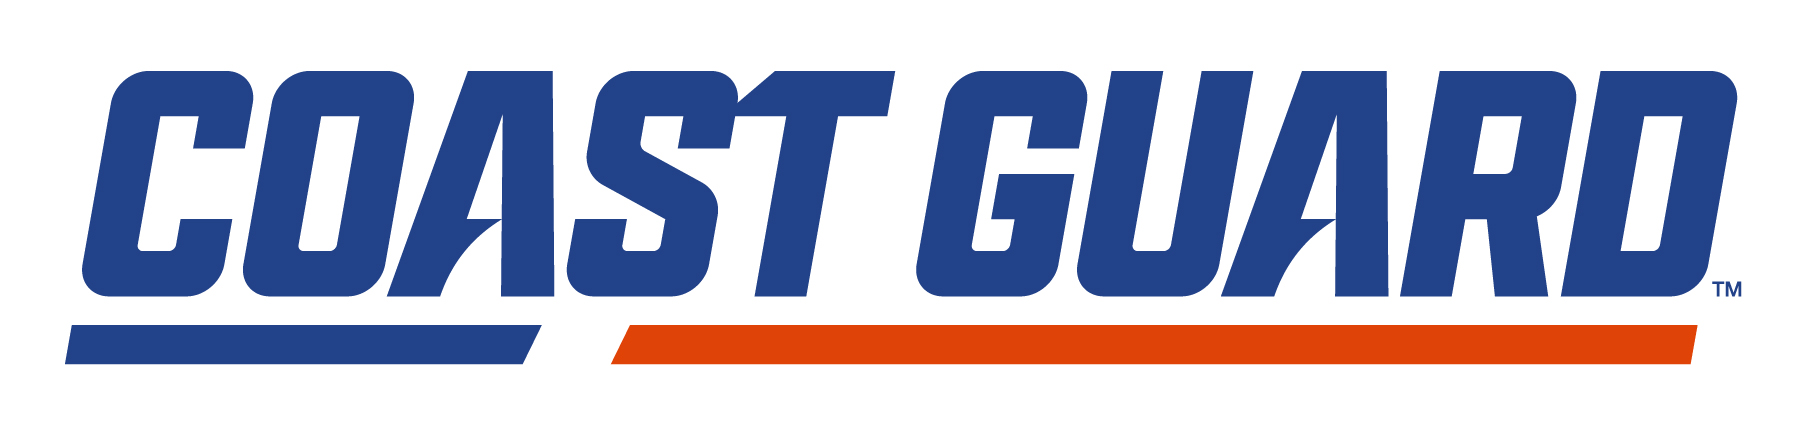 U.S. Coast Guard Academy introduces fierce bear logo for athletic